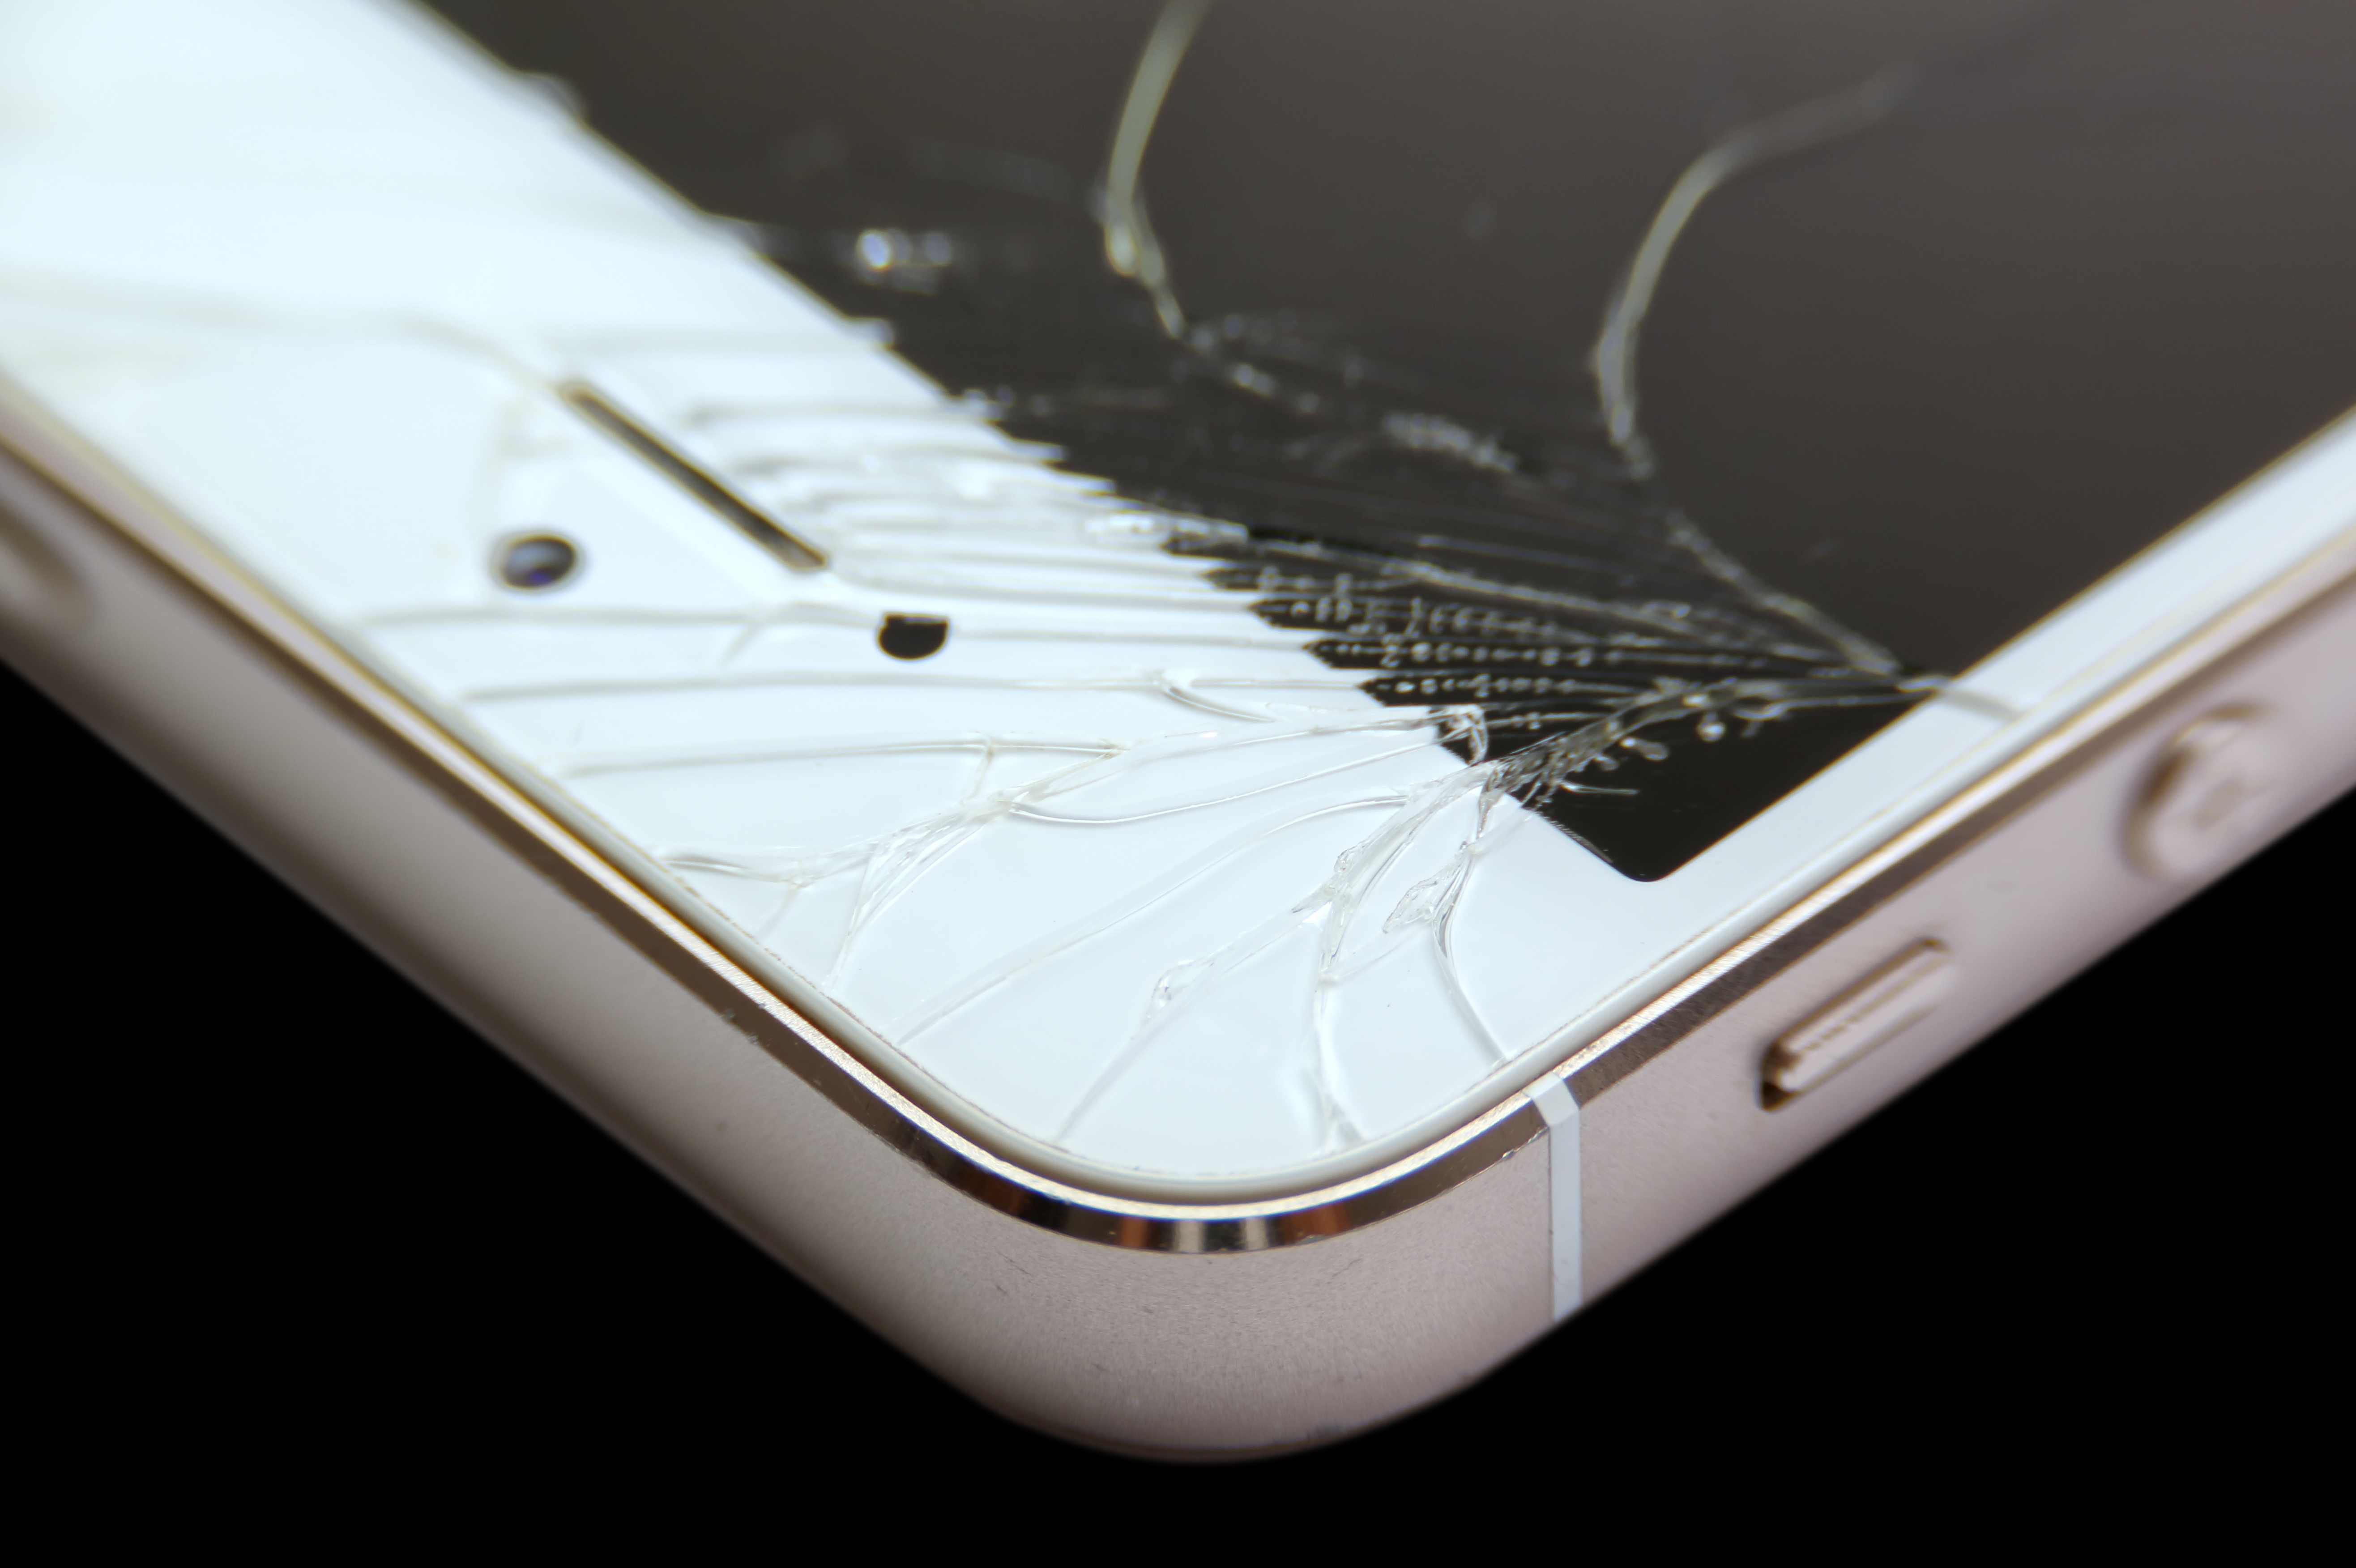 Un teléfono dañado | Fuente: Shutterstock